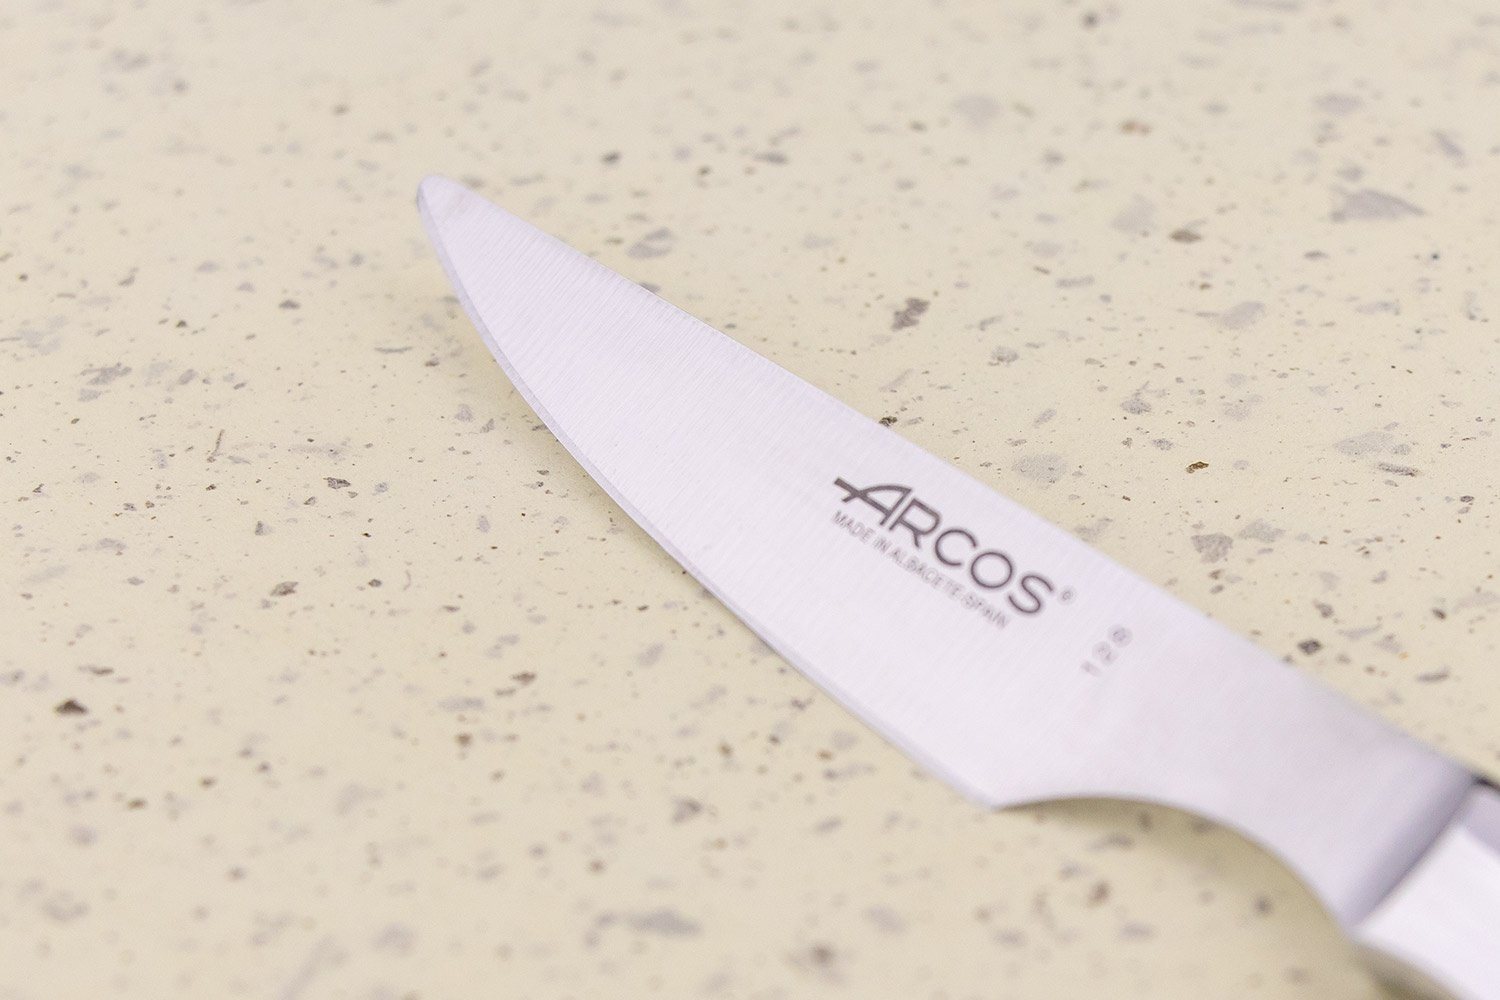 Arcos steak knives Set of 12 units brown polyamide handle - 18-804000 -  Arcos